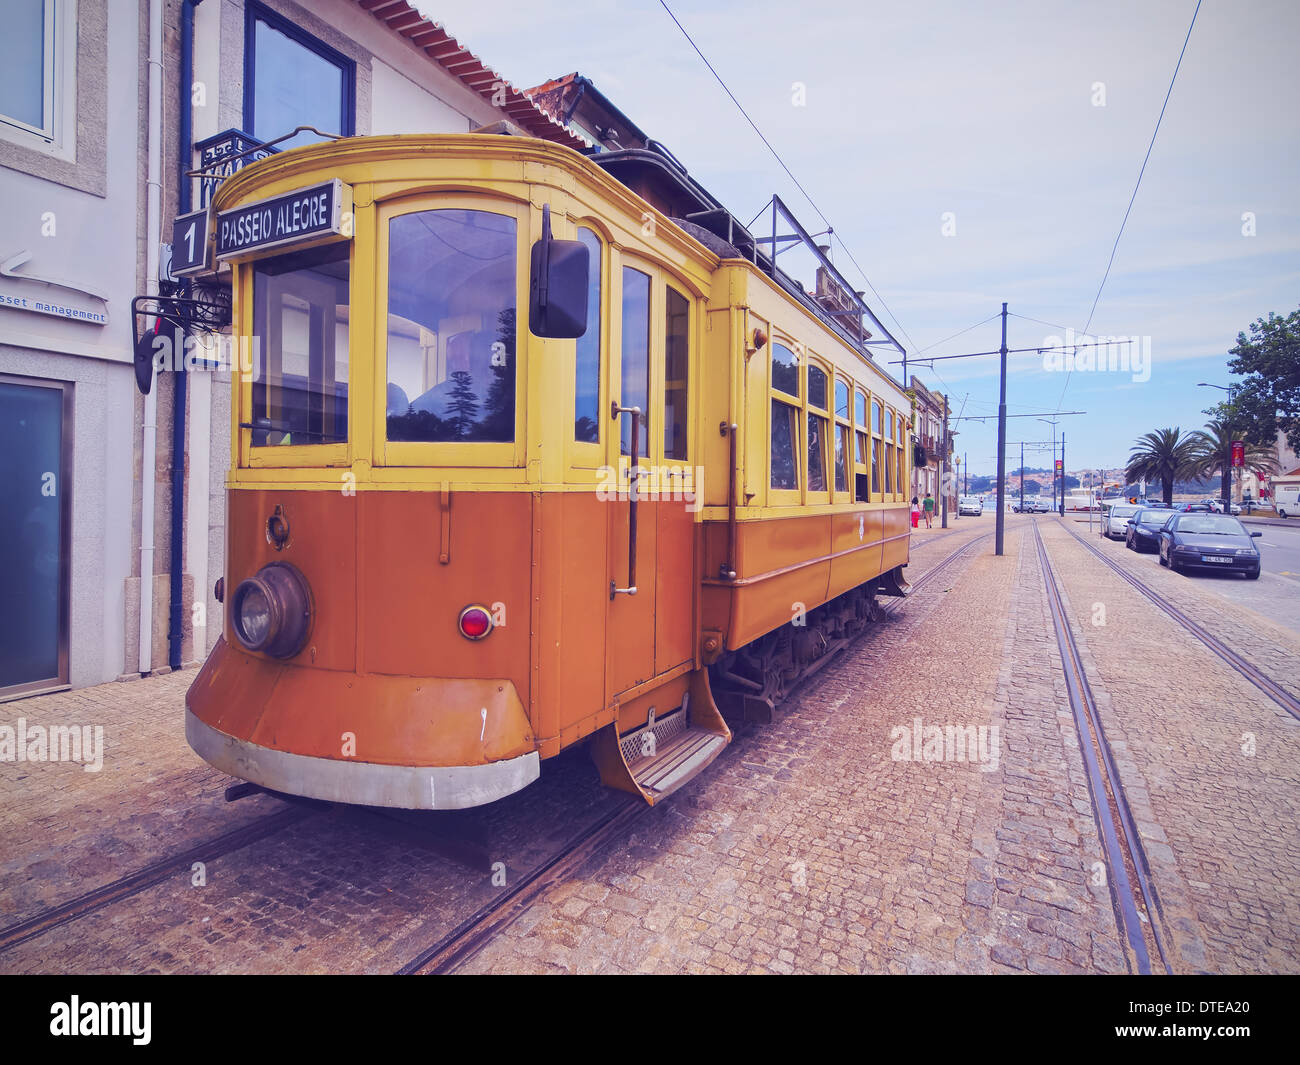 Passeio Alegre Nummer 1 Straßenbahn entlang des Flusses Douro in Porto, Portugal Stockfoto